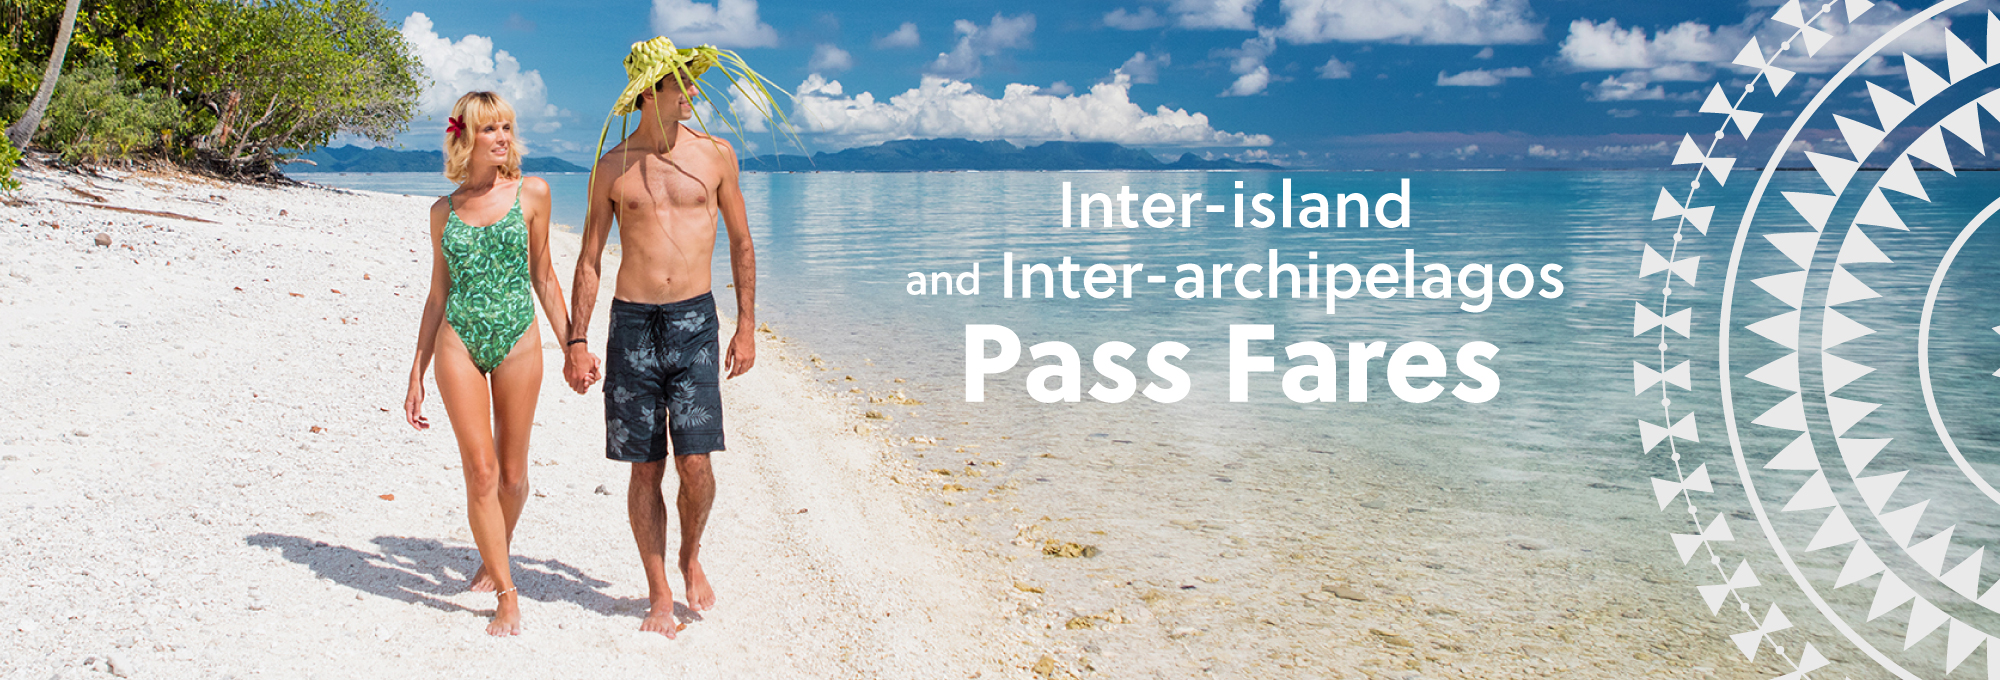 Inter-island and inter-archipelagos pass fares